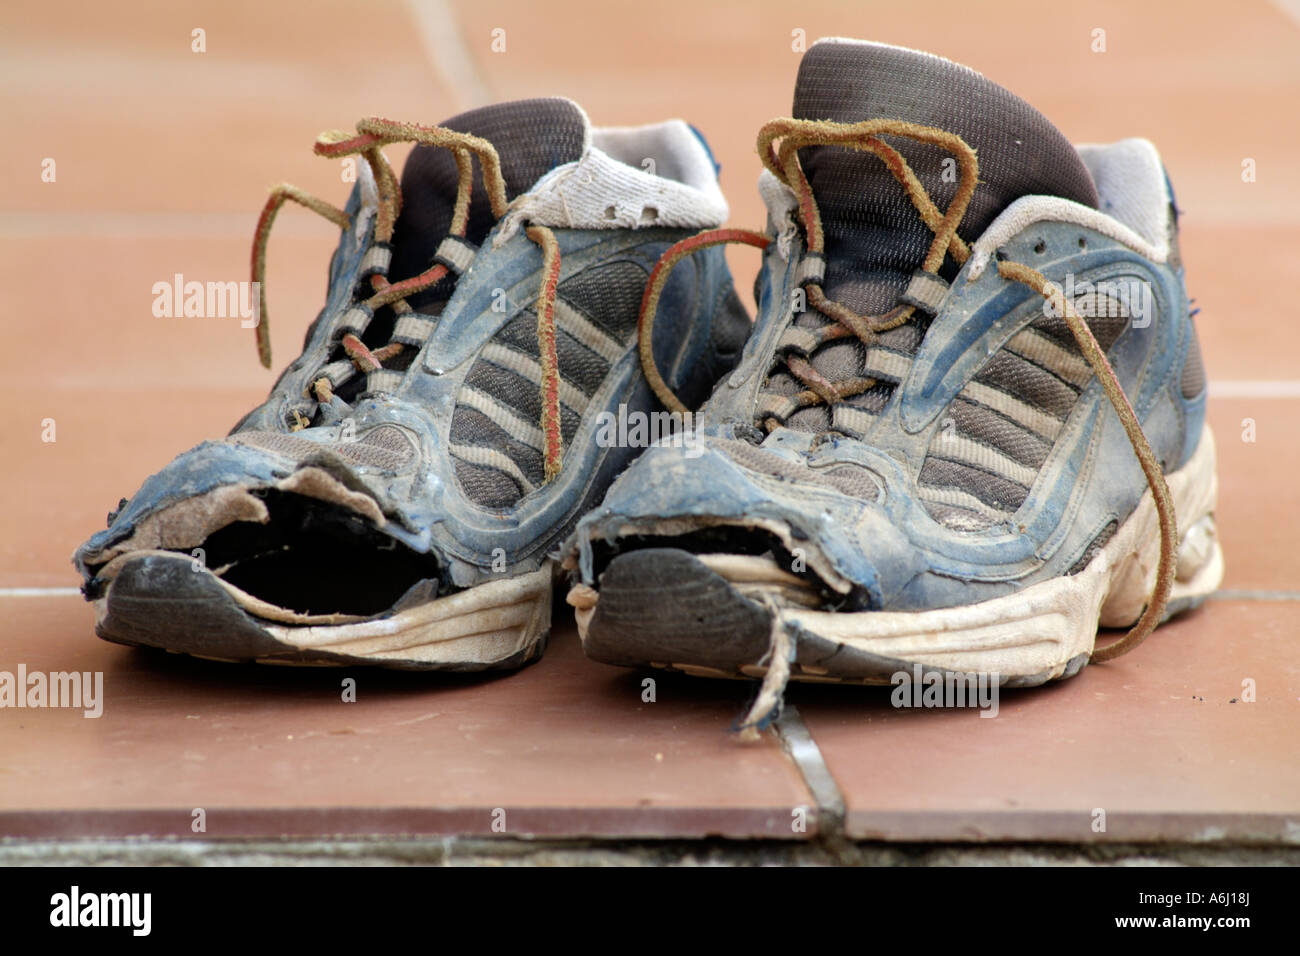 Vieilles baskets. Chaussures usées Photo Stock - Alamy